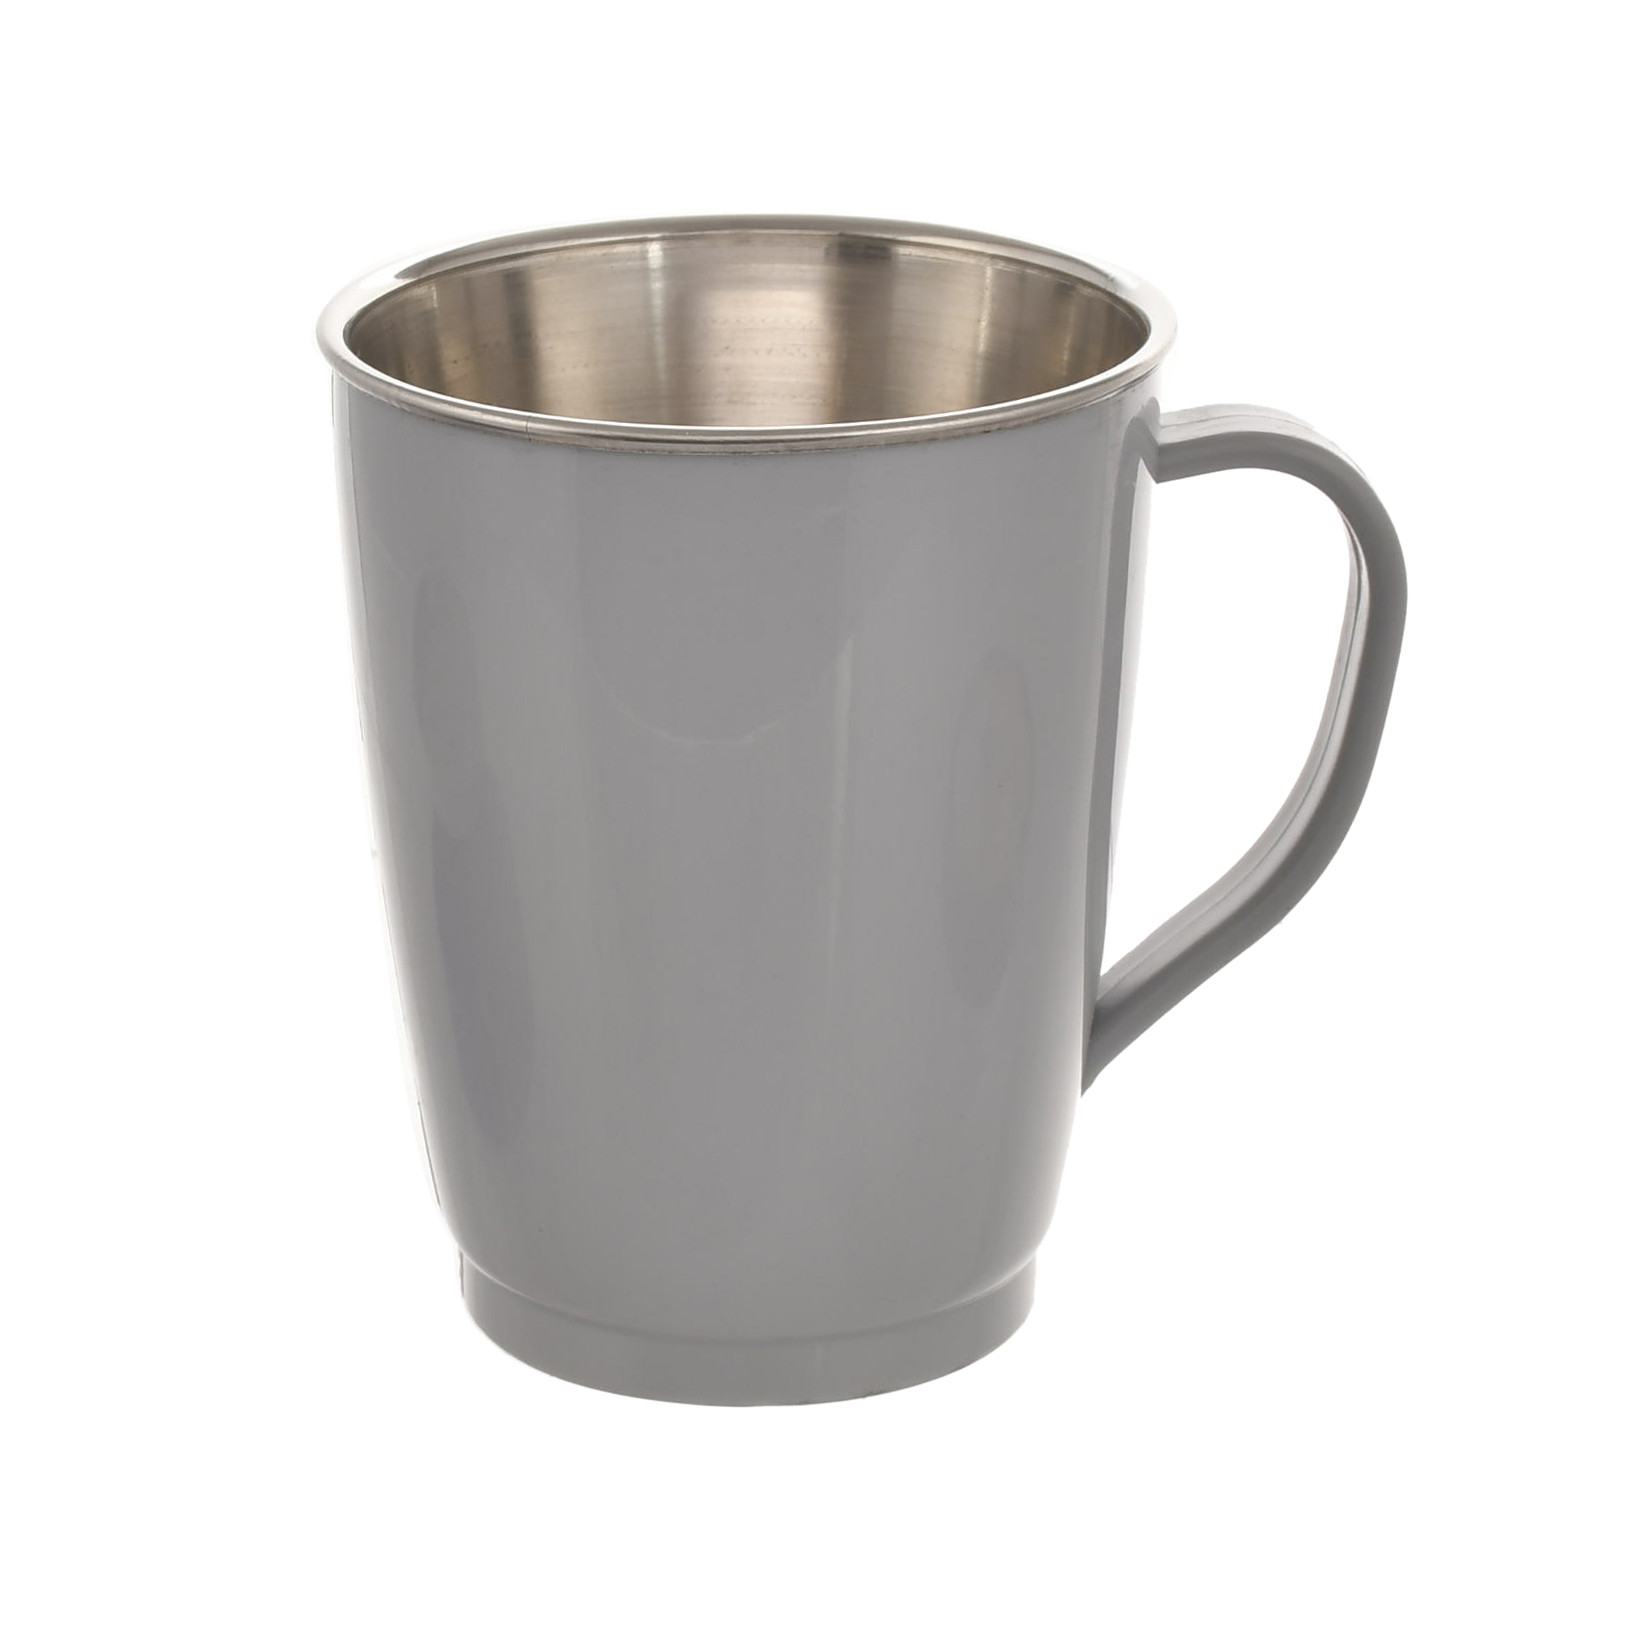 Kuber Industries Disney Printed Food Grade BPA Free Tea/Coffee Mug for Coffee Tea Cocoa, Camping Mugs with Lid, Pack of 6 (Grey & Cream)